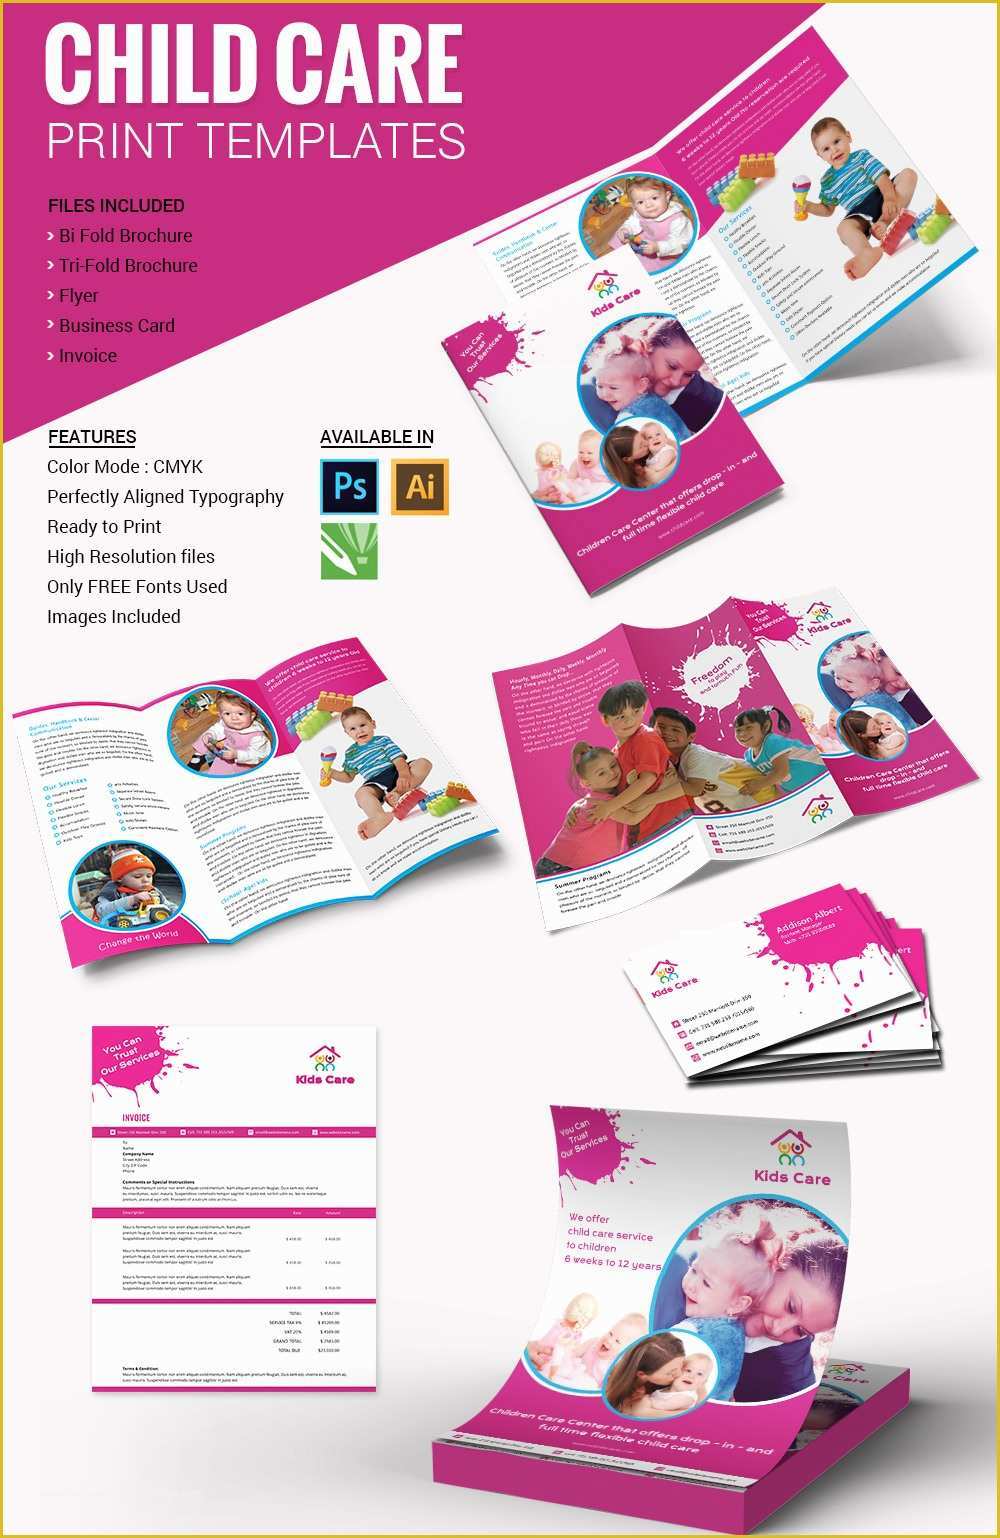 Preschool Brochure Template Free Of 10 Beautiful Child Care Brochure Templates